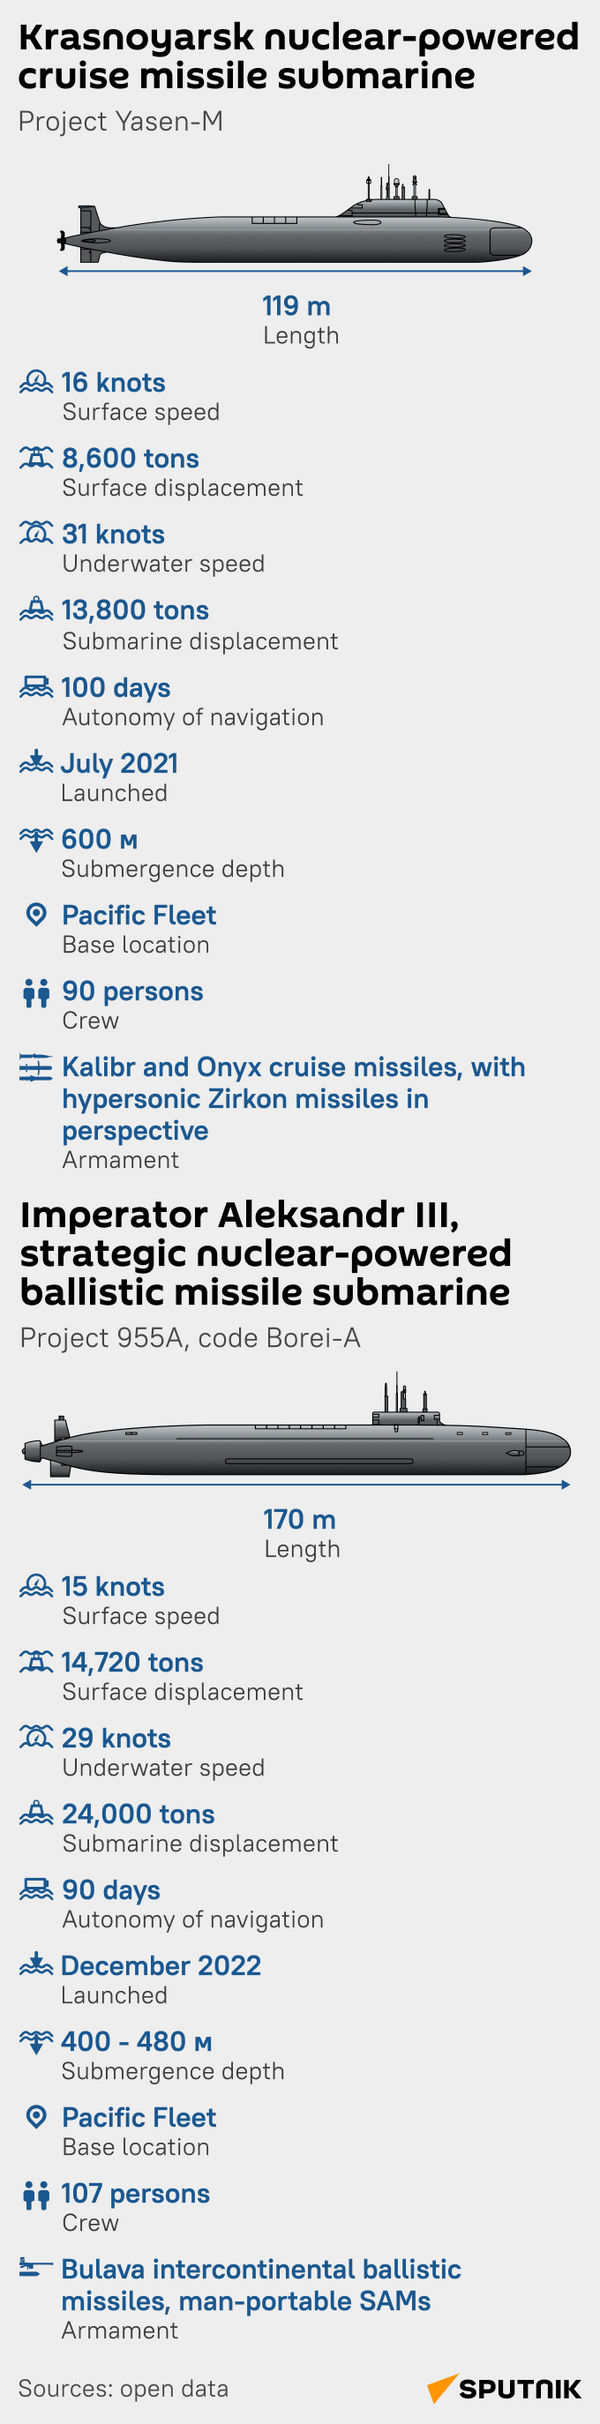 Russian nuclear powered subs mob - Sputnik International